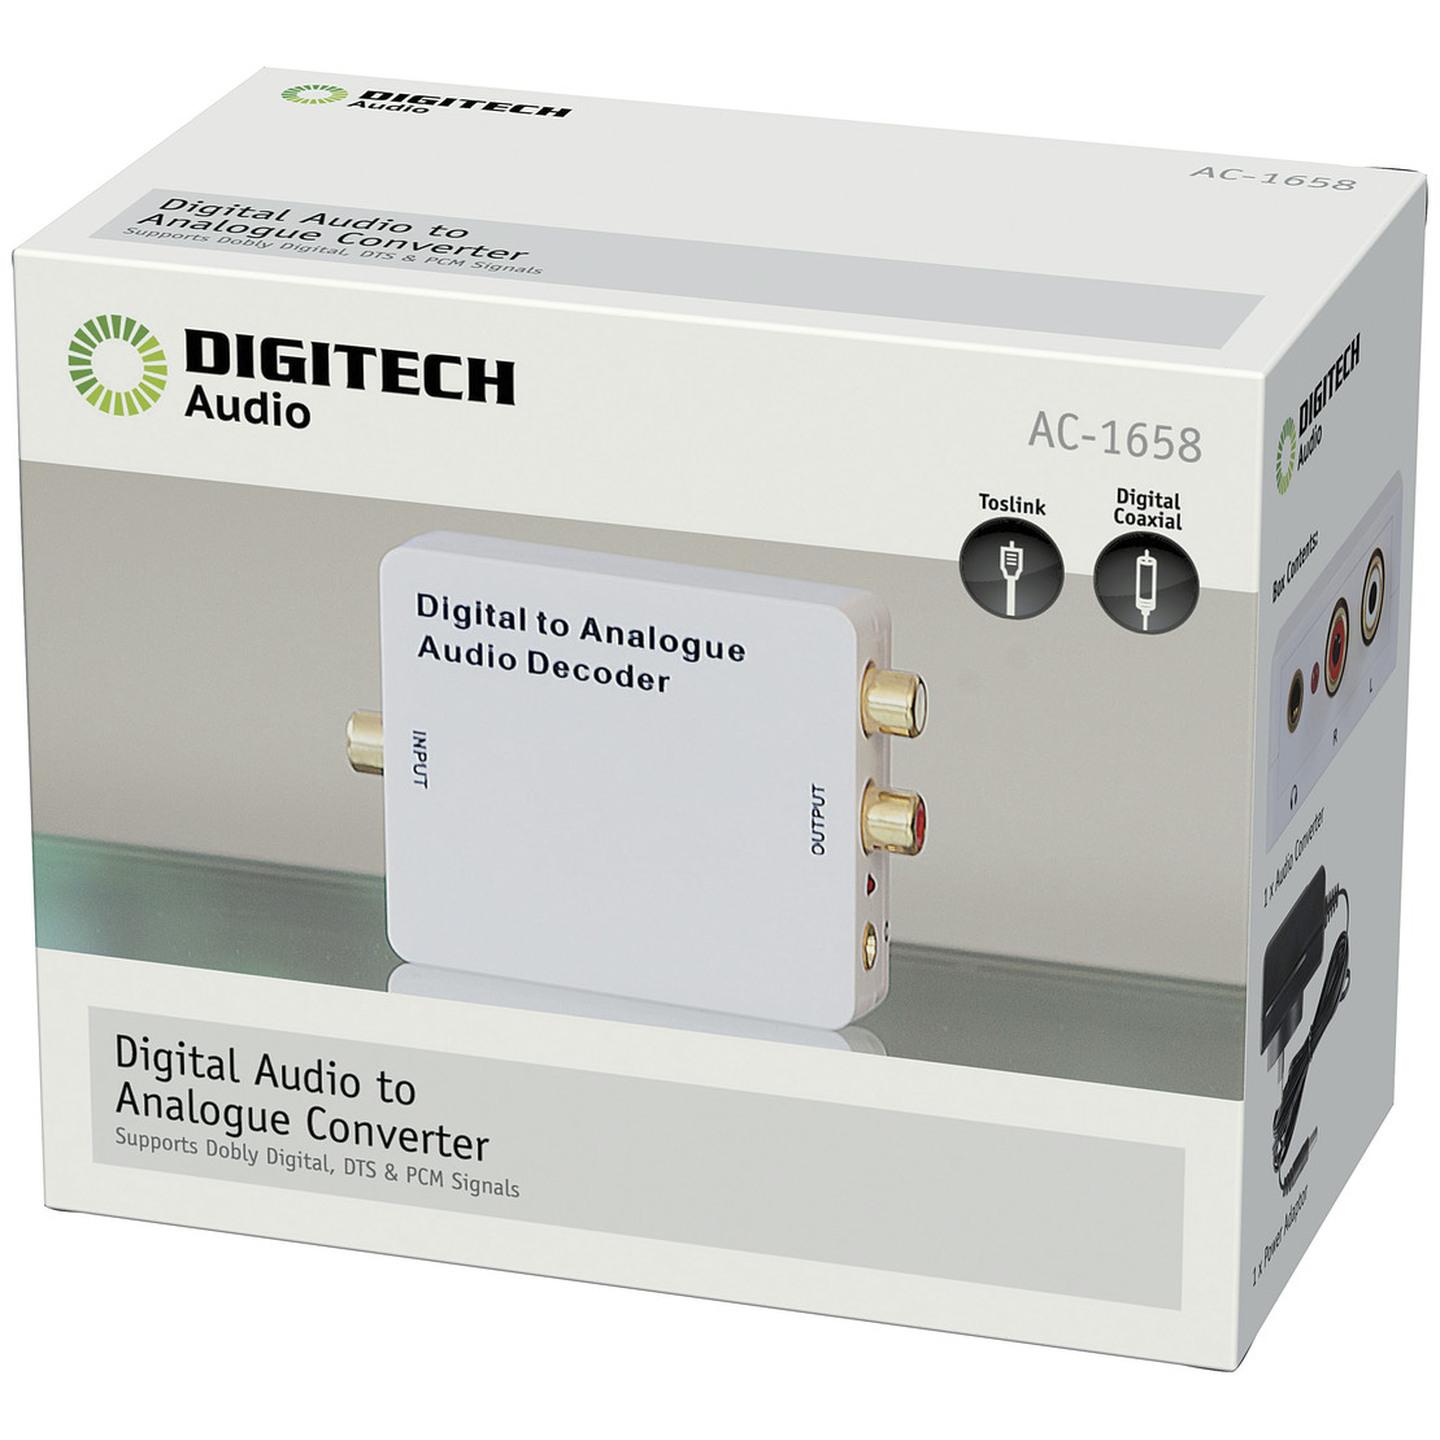 Digital to Analog Audio Decoder